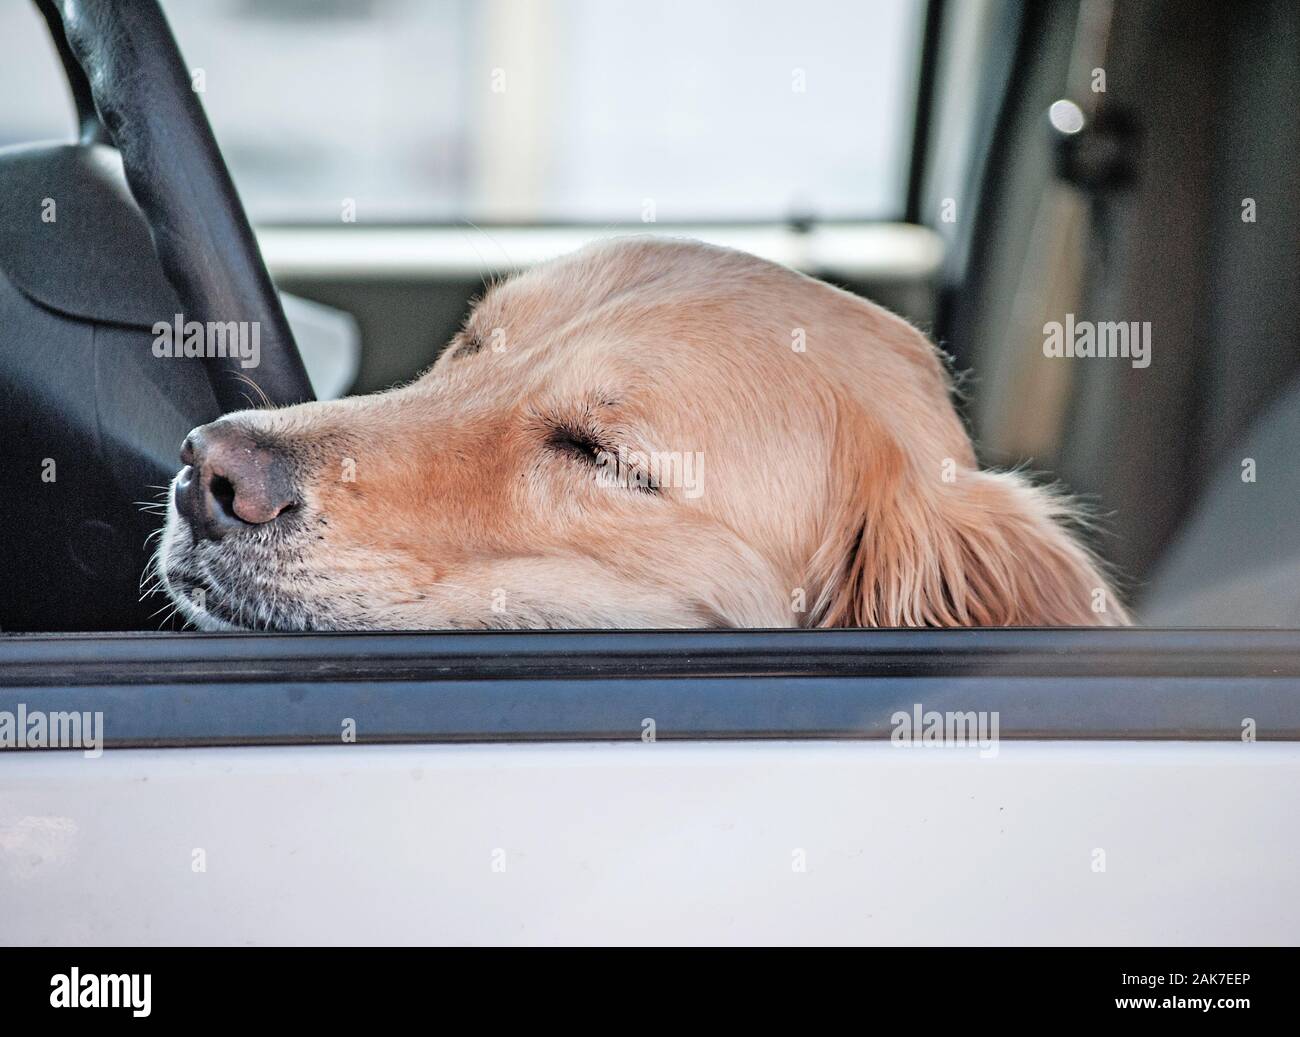 Open window of car with a adorable Golden Retriever sleeping inside Stock Photo